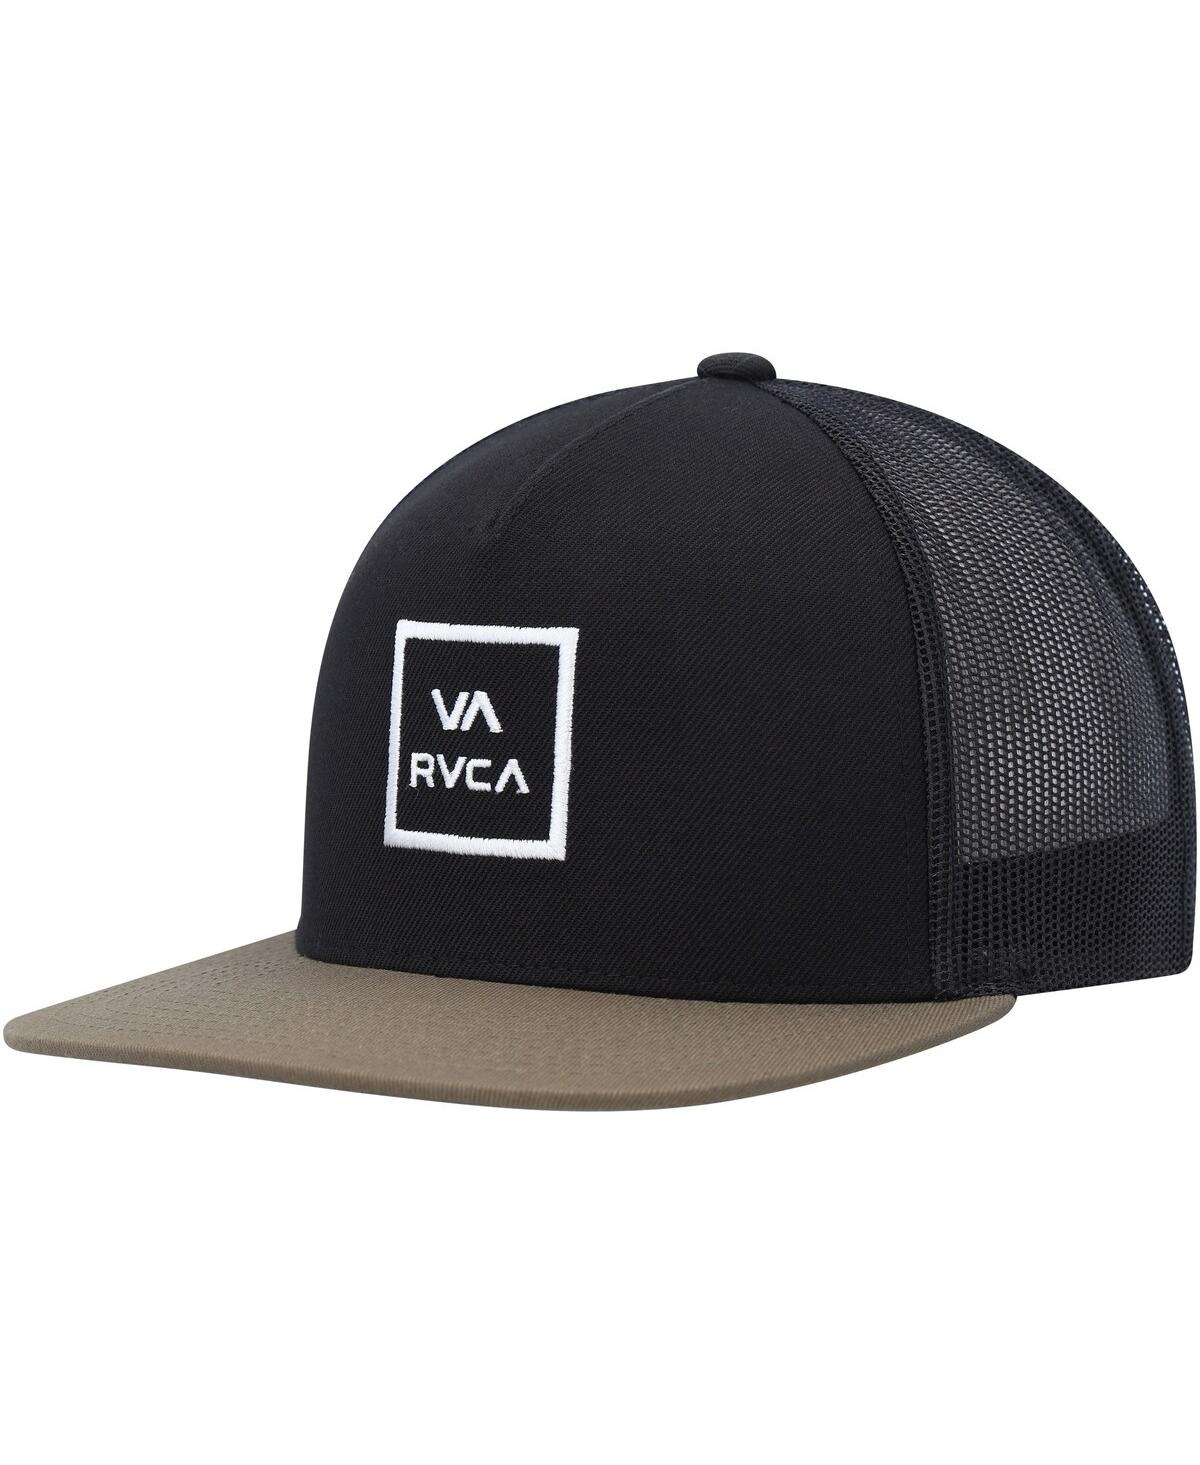 Rvca Men's  Black Va All The Way Trucker Snapback Hat